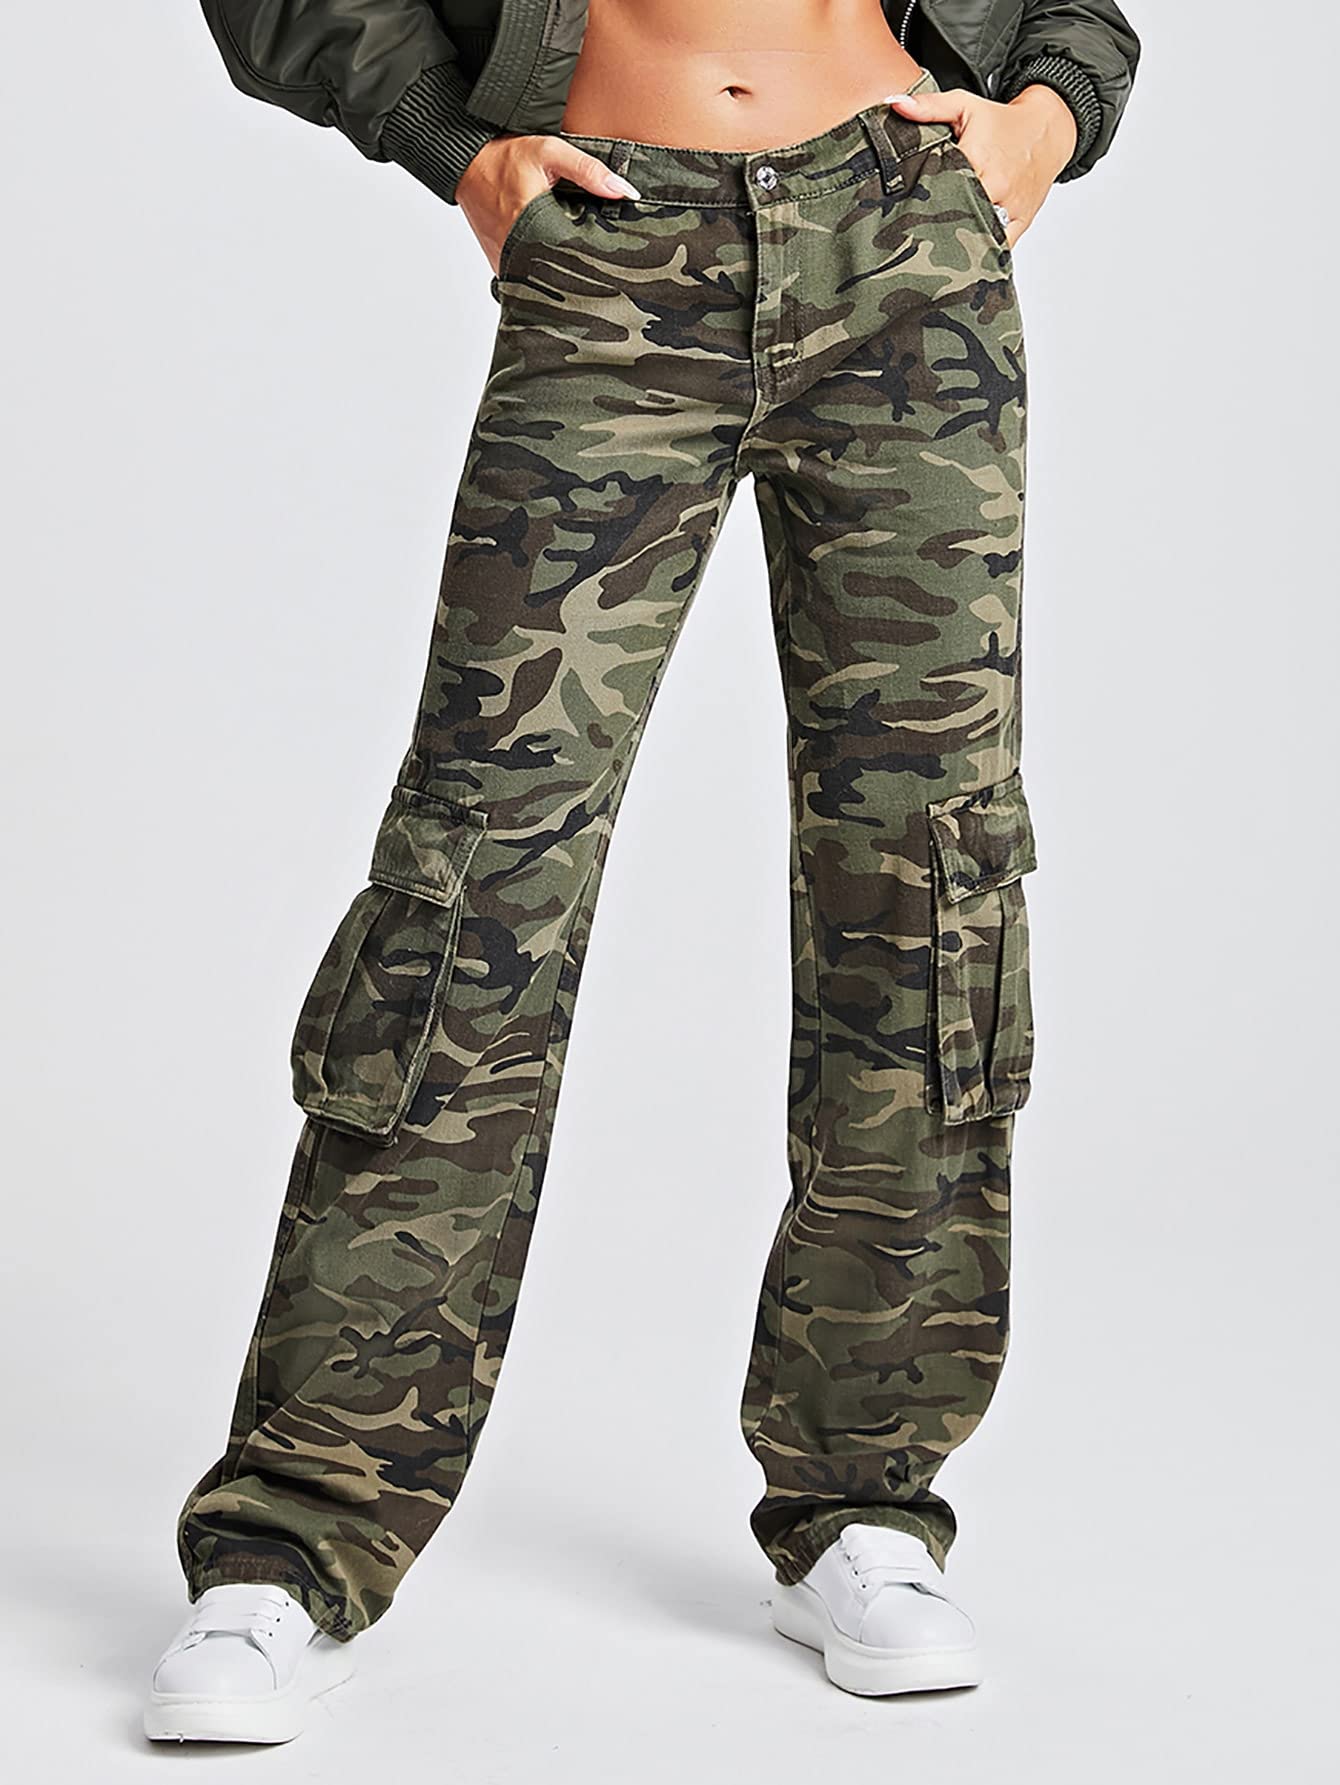 WDIRARA Women's Camo Print Cargo Baggy Jeans High Waist Wide Leg Denim Army Pants Army Green Camouflage L